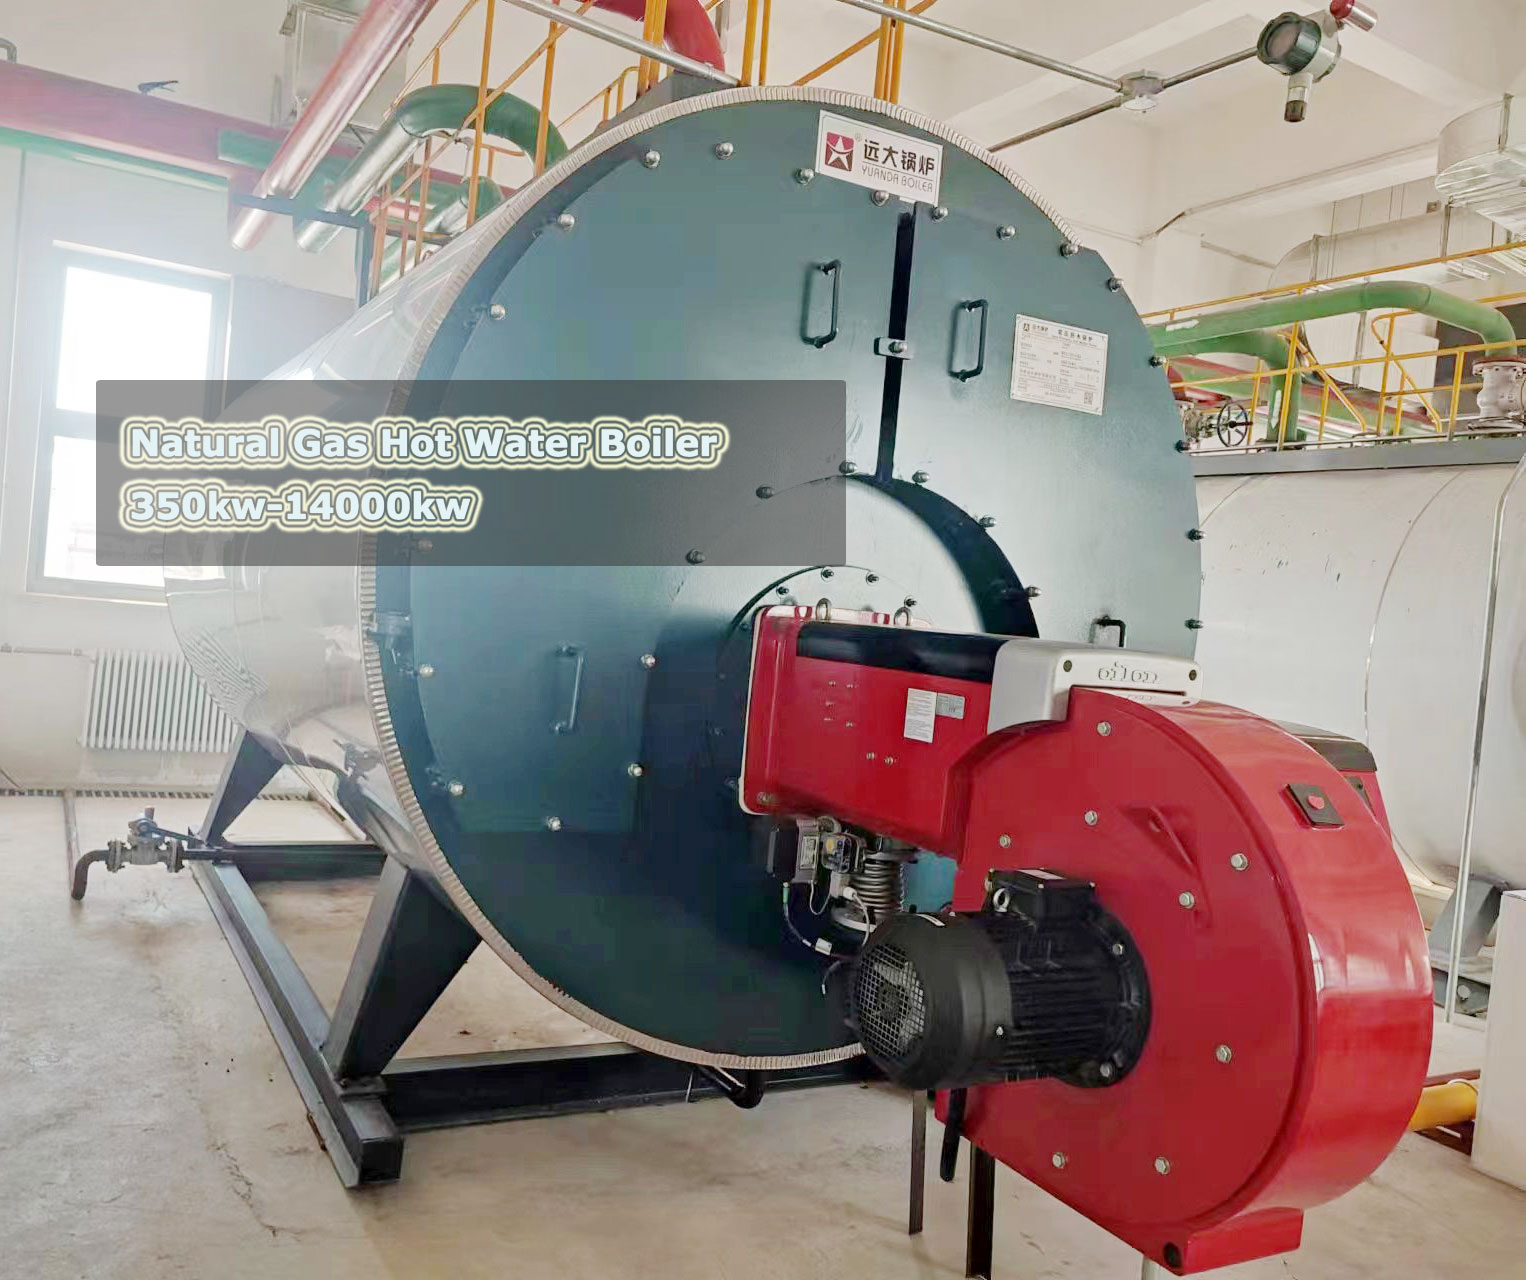 natural-gas-hot-water-boiler-for-building-heating.jpg